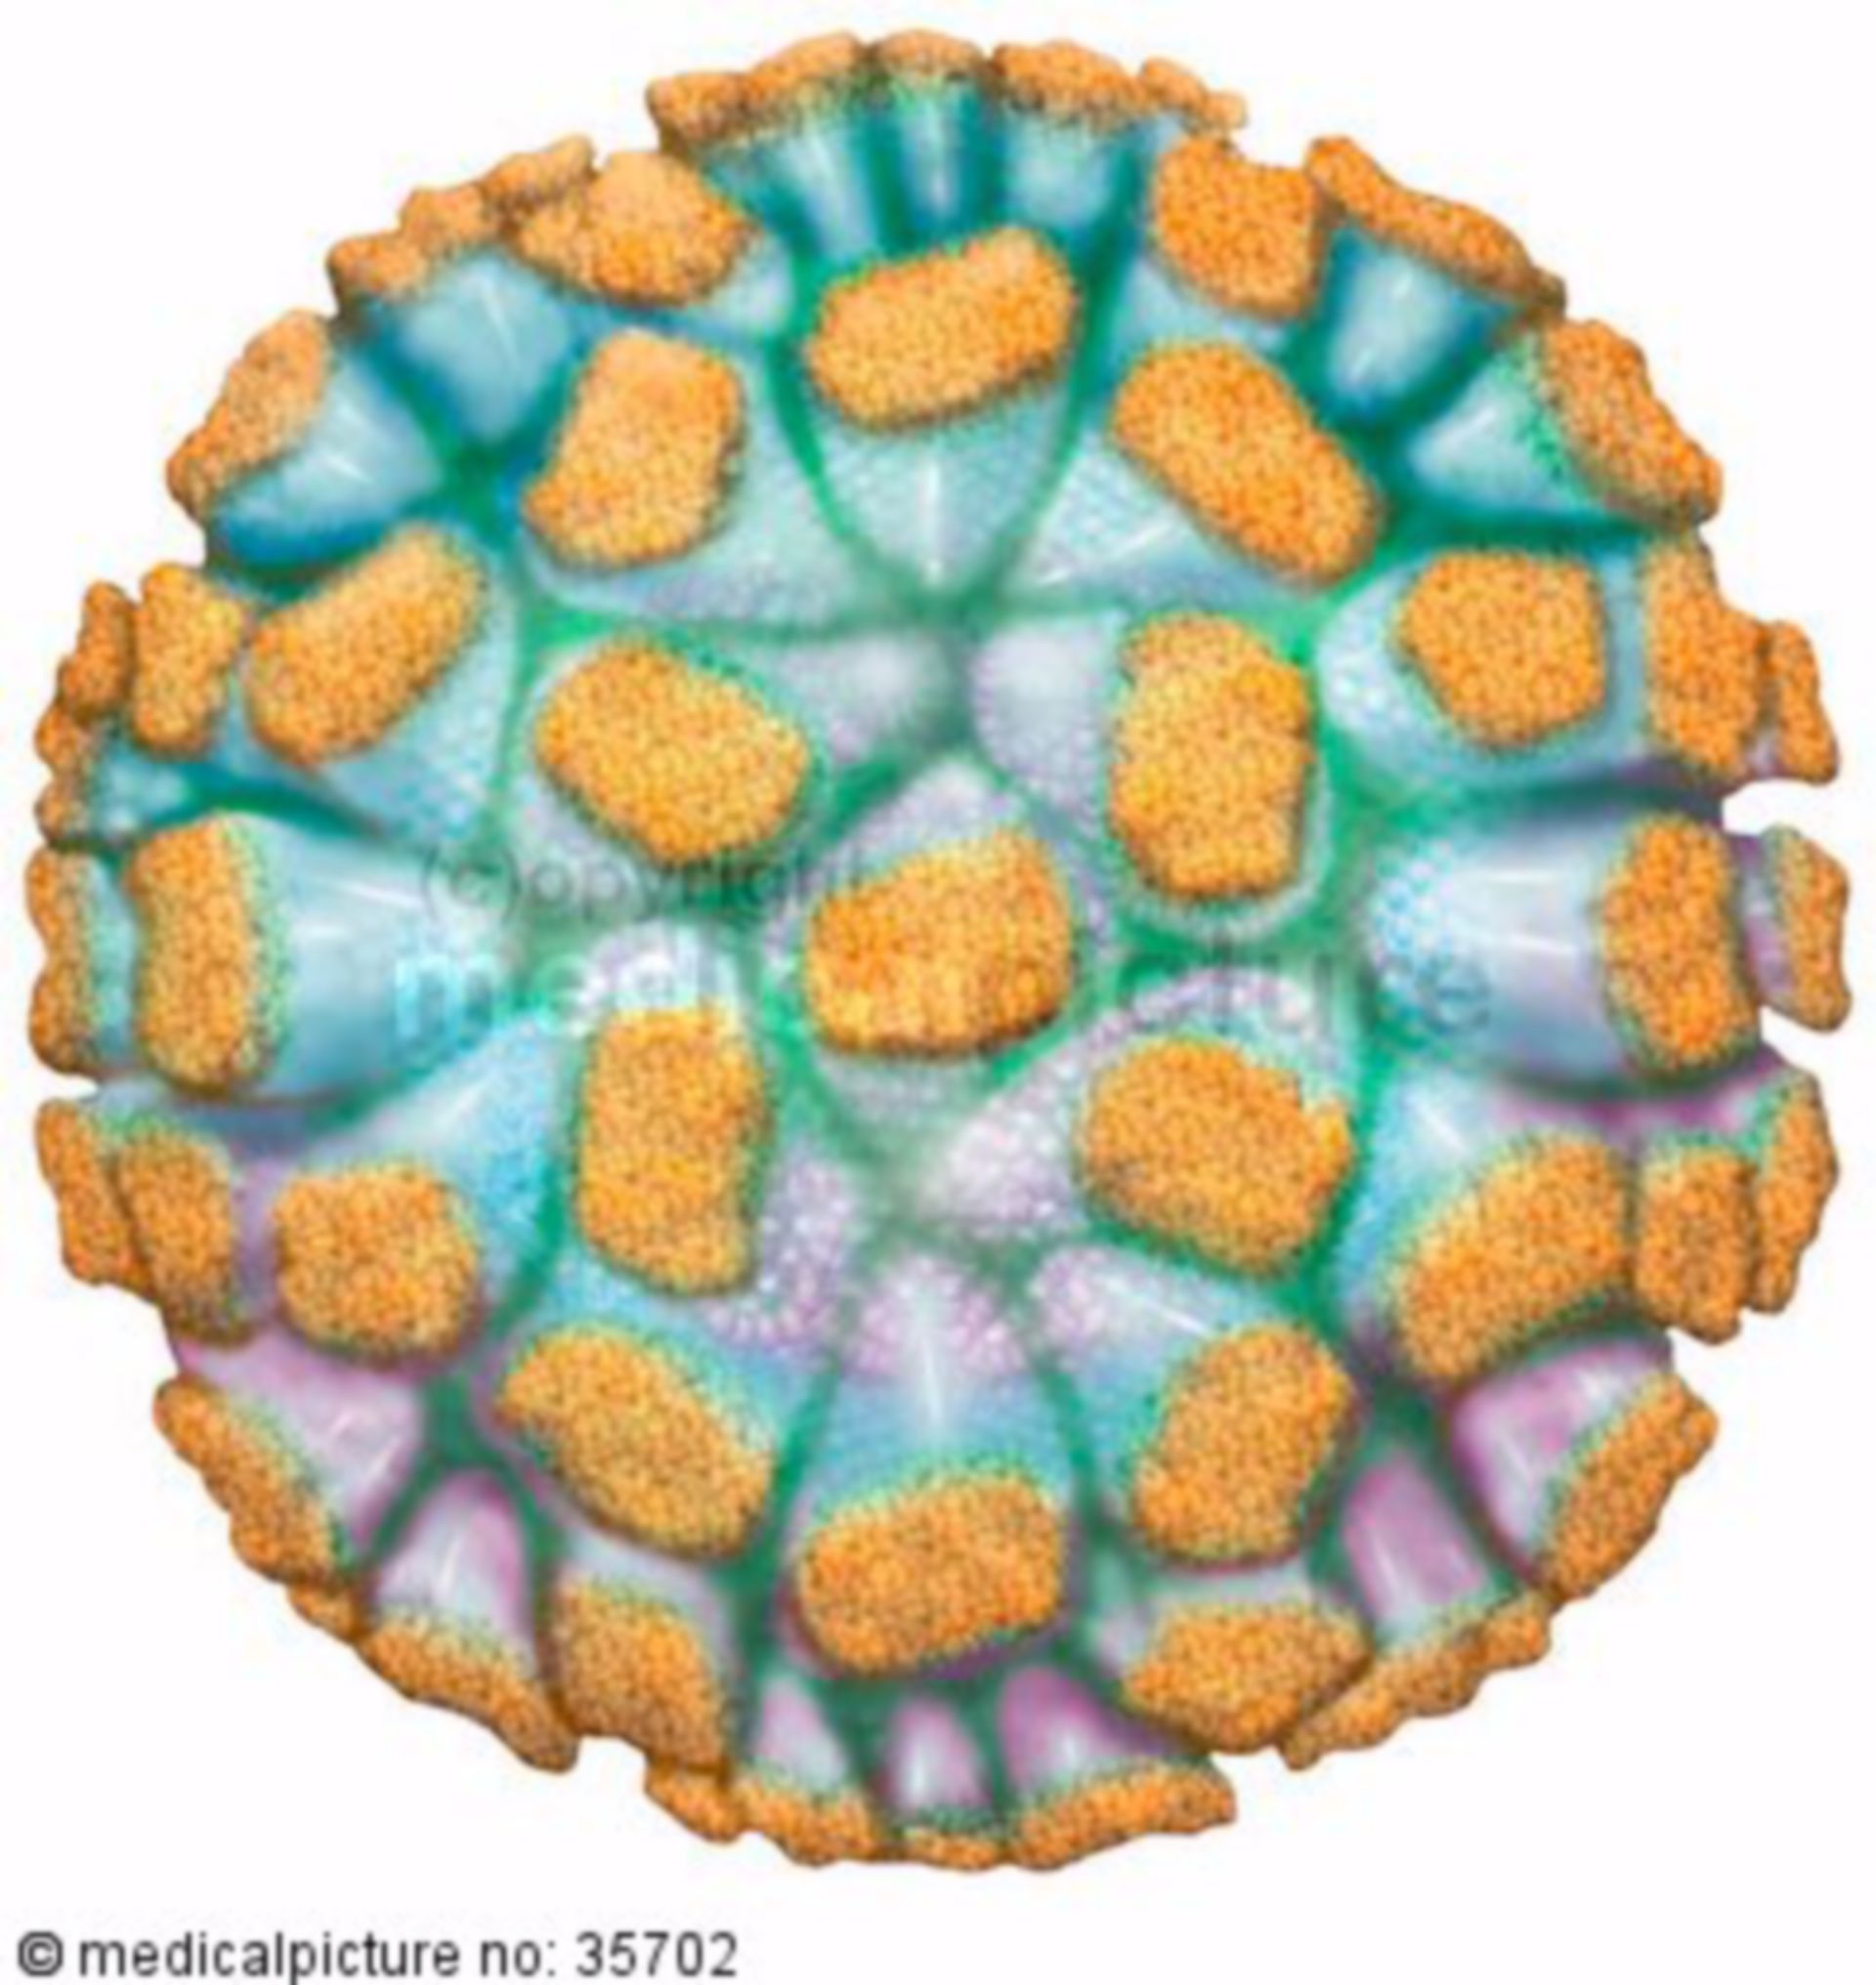  Norwalk Virus, Norovirus, Virenmodell 
